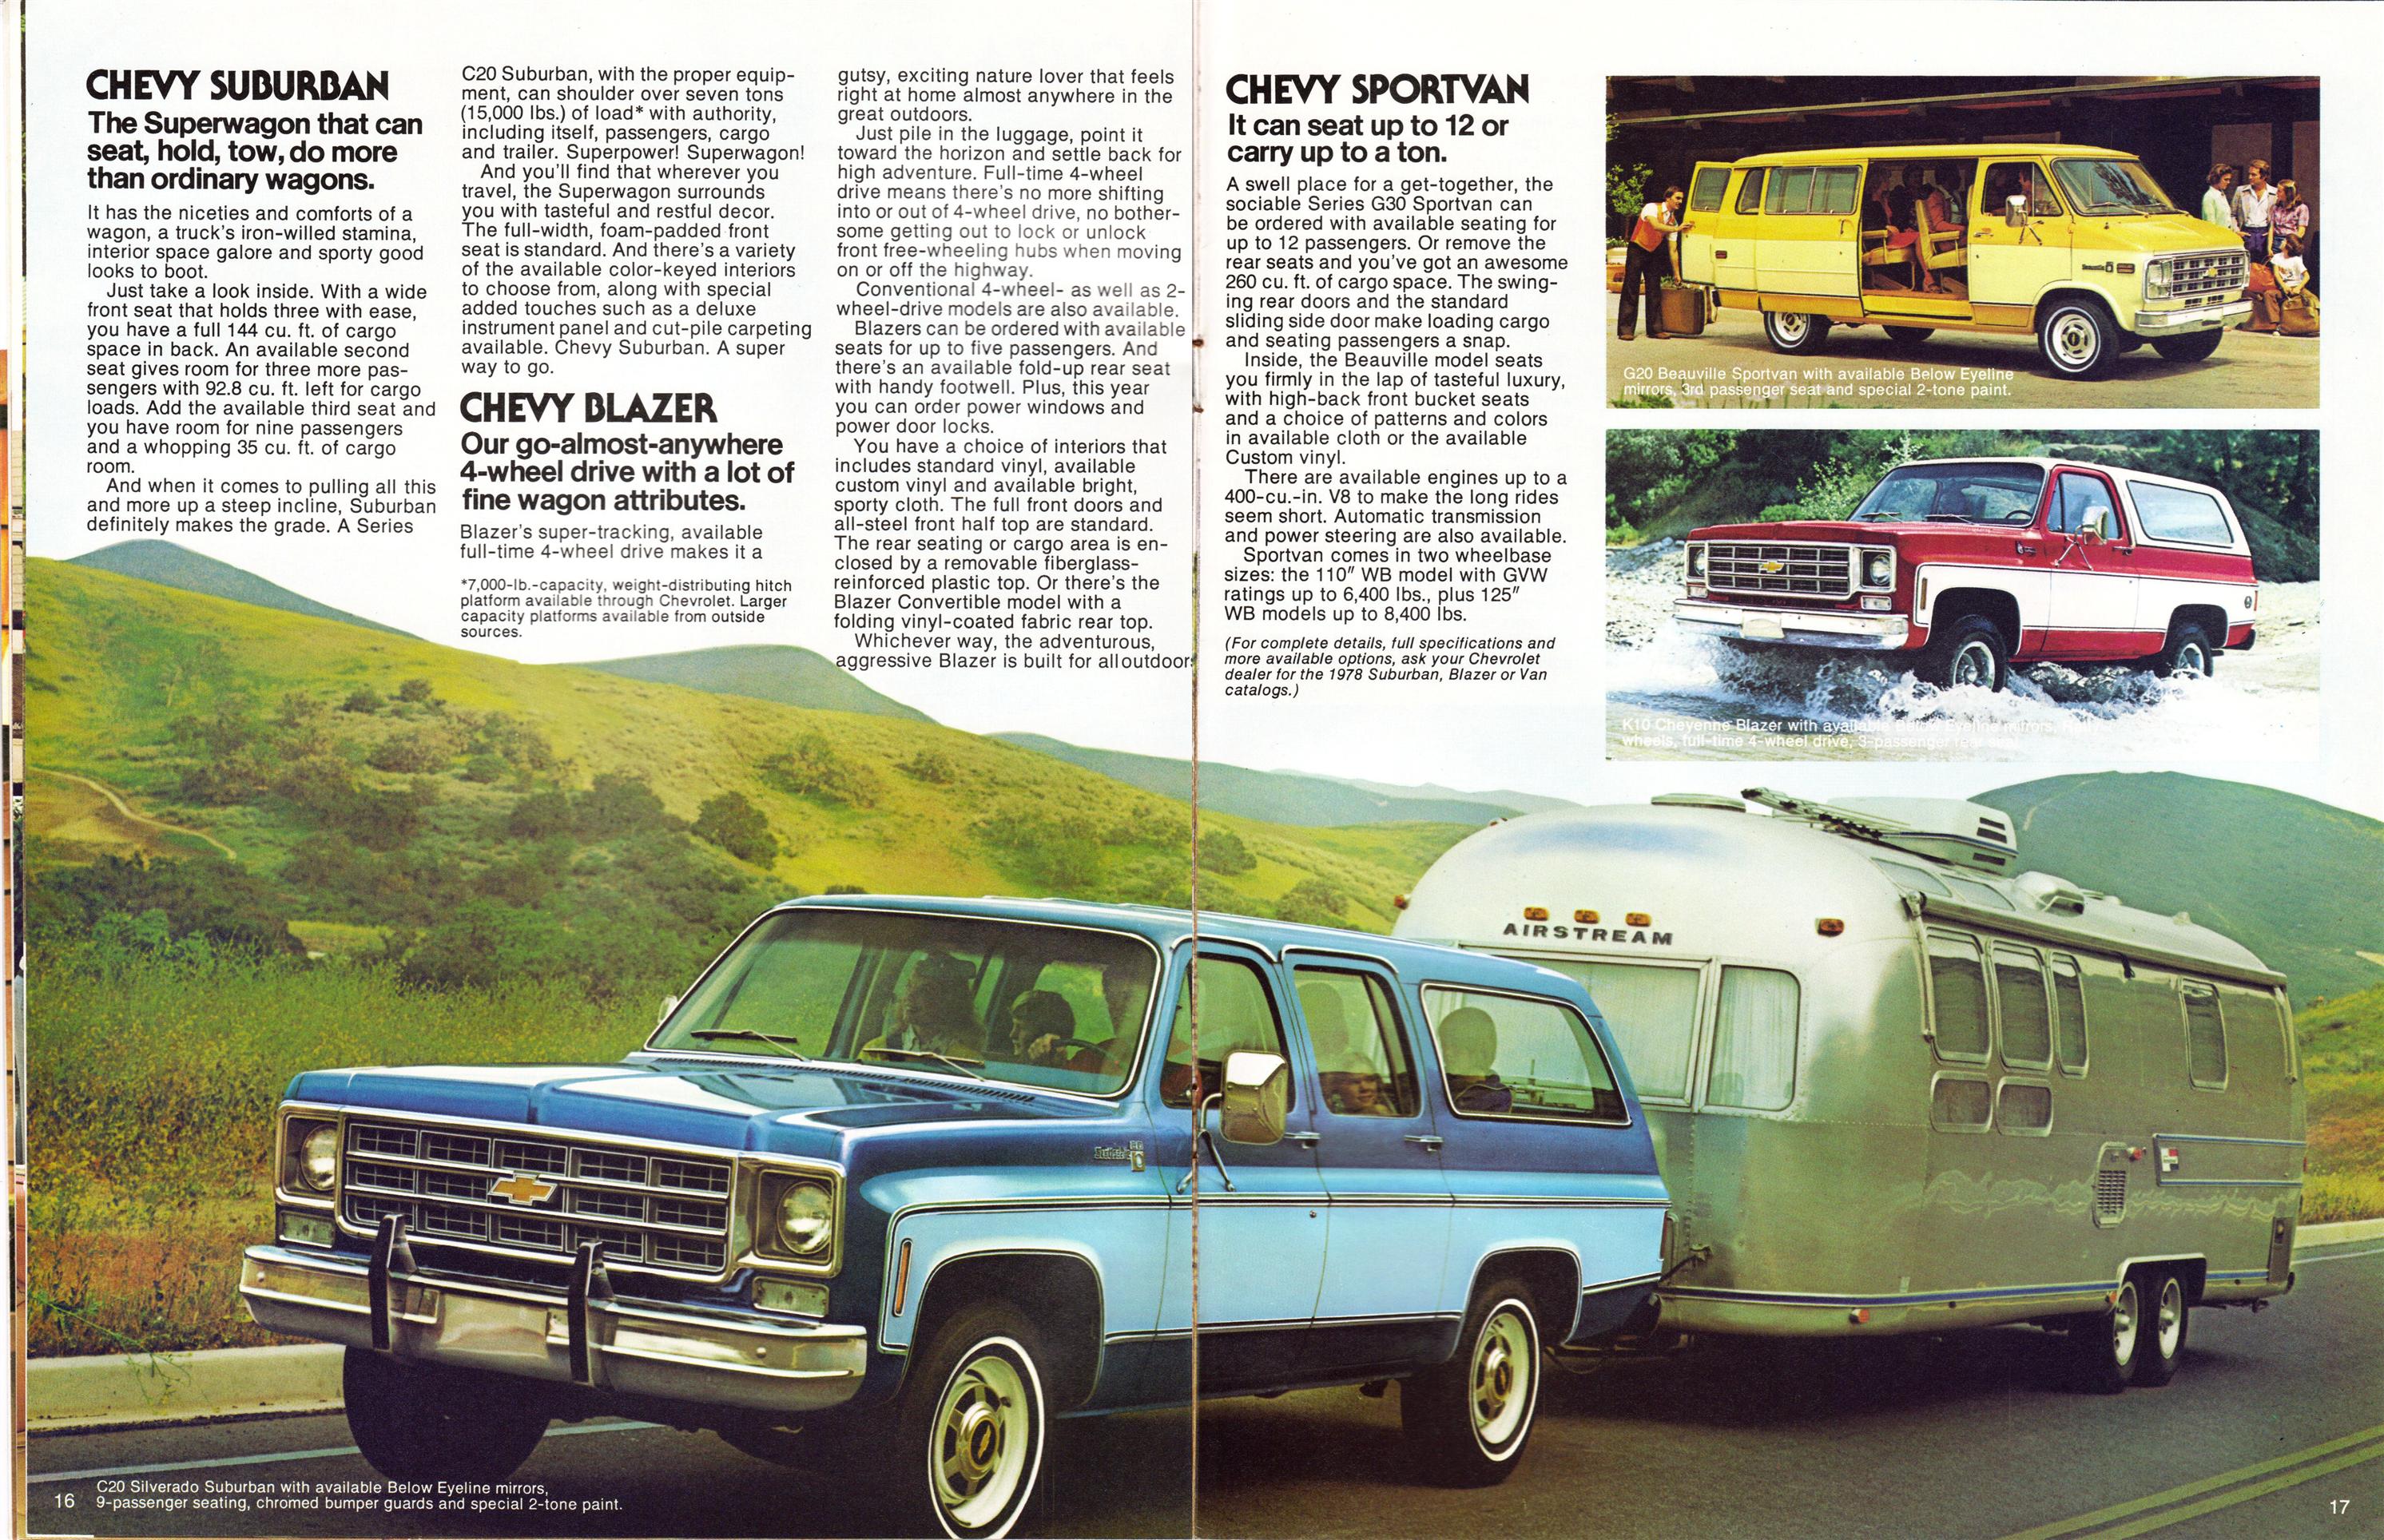 1978 Chevrolet Wagons Pg16  amp  17